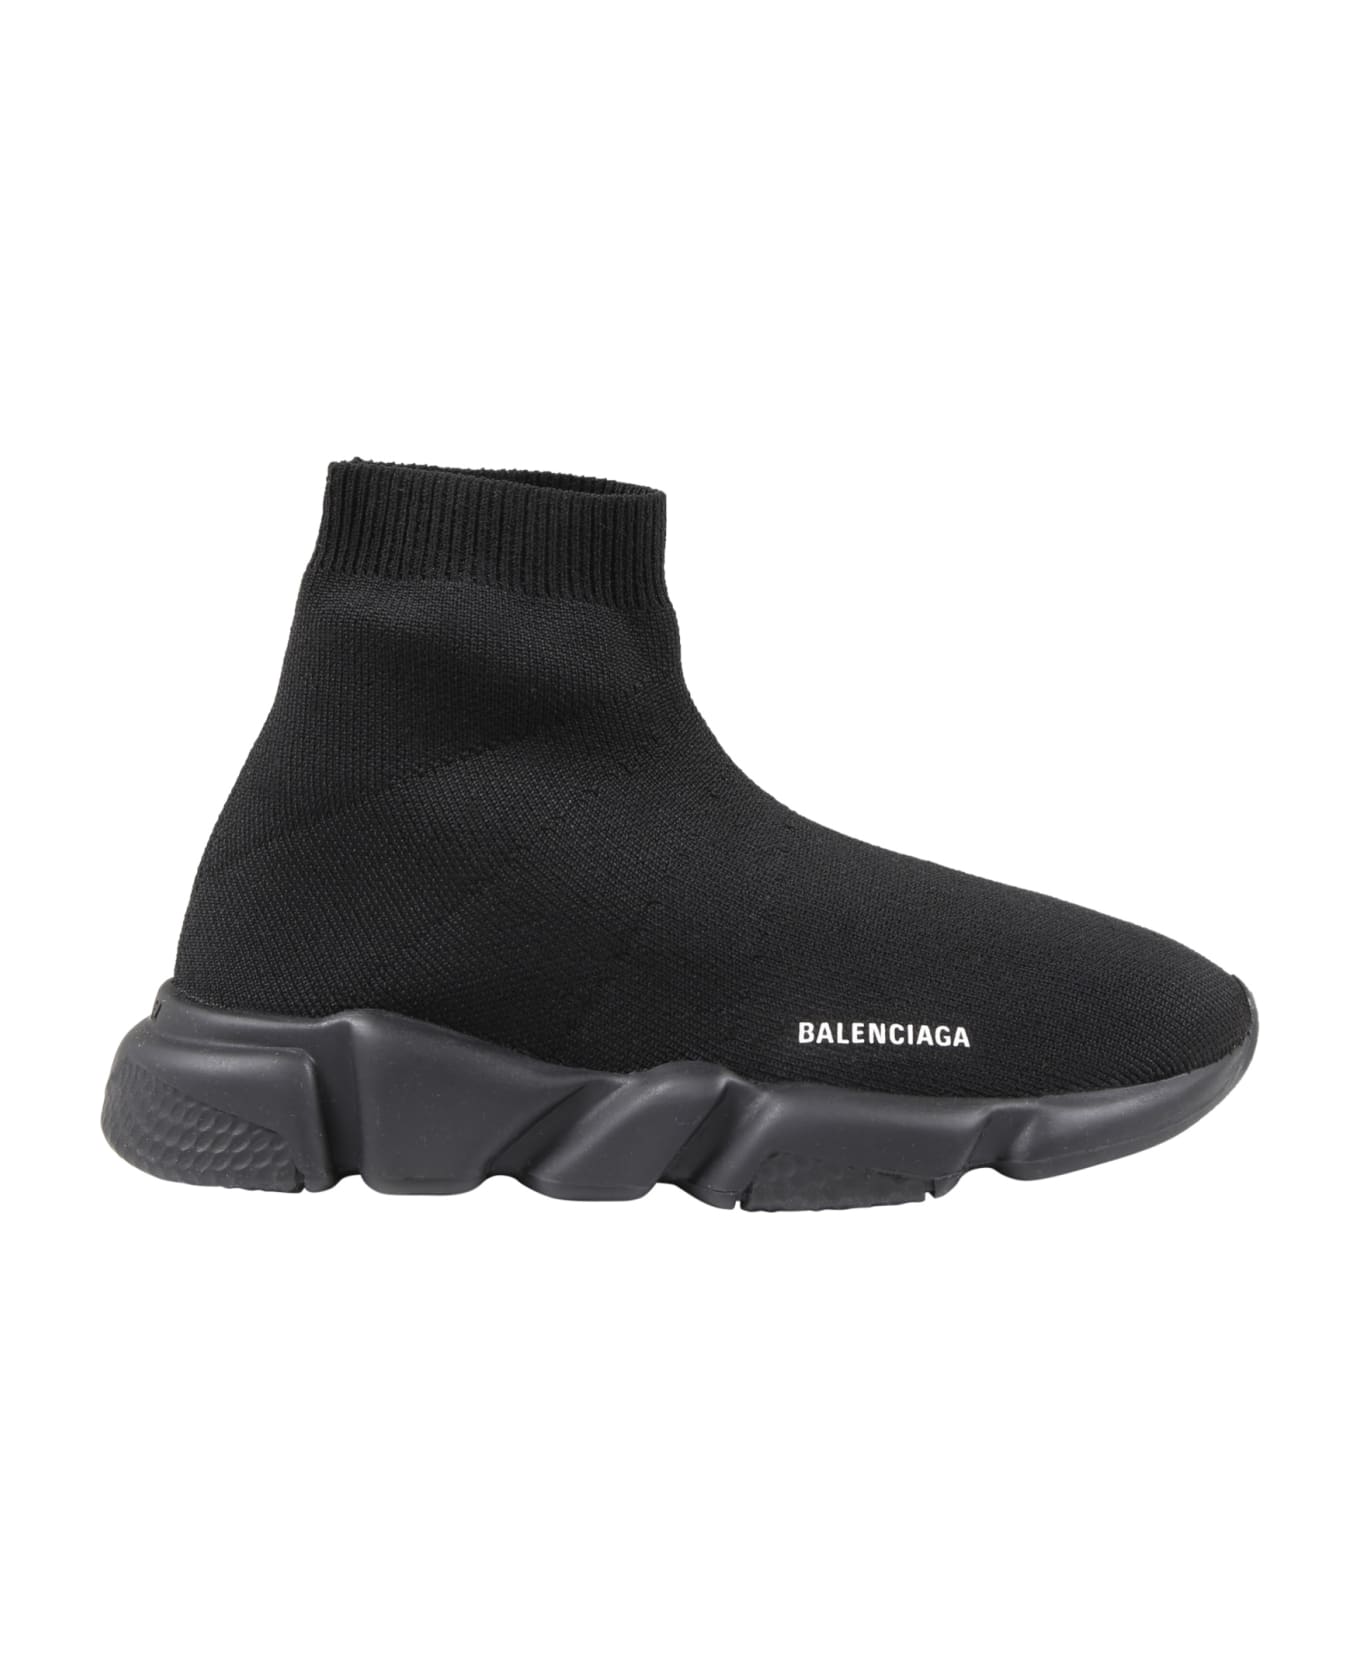 Balenciaga Black Sneakers For Kids - Black